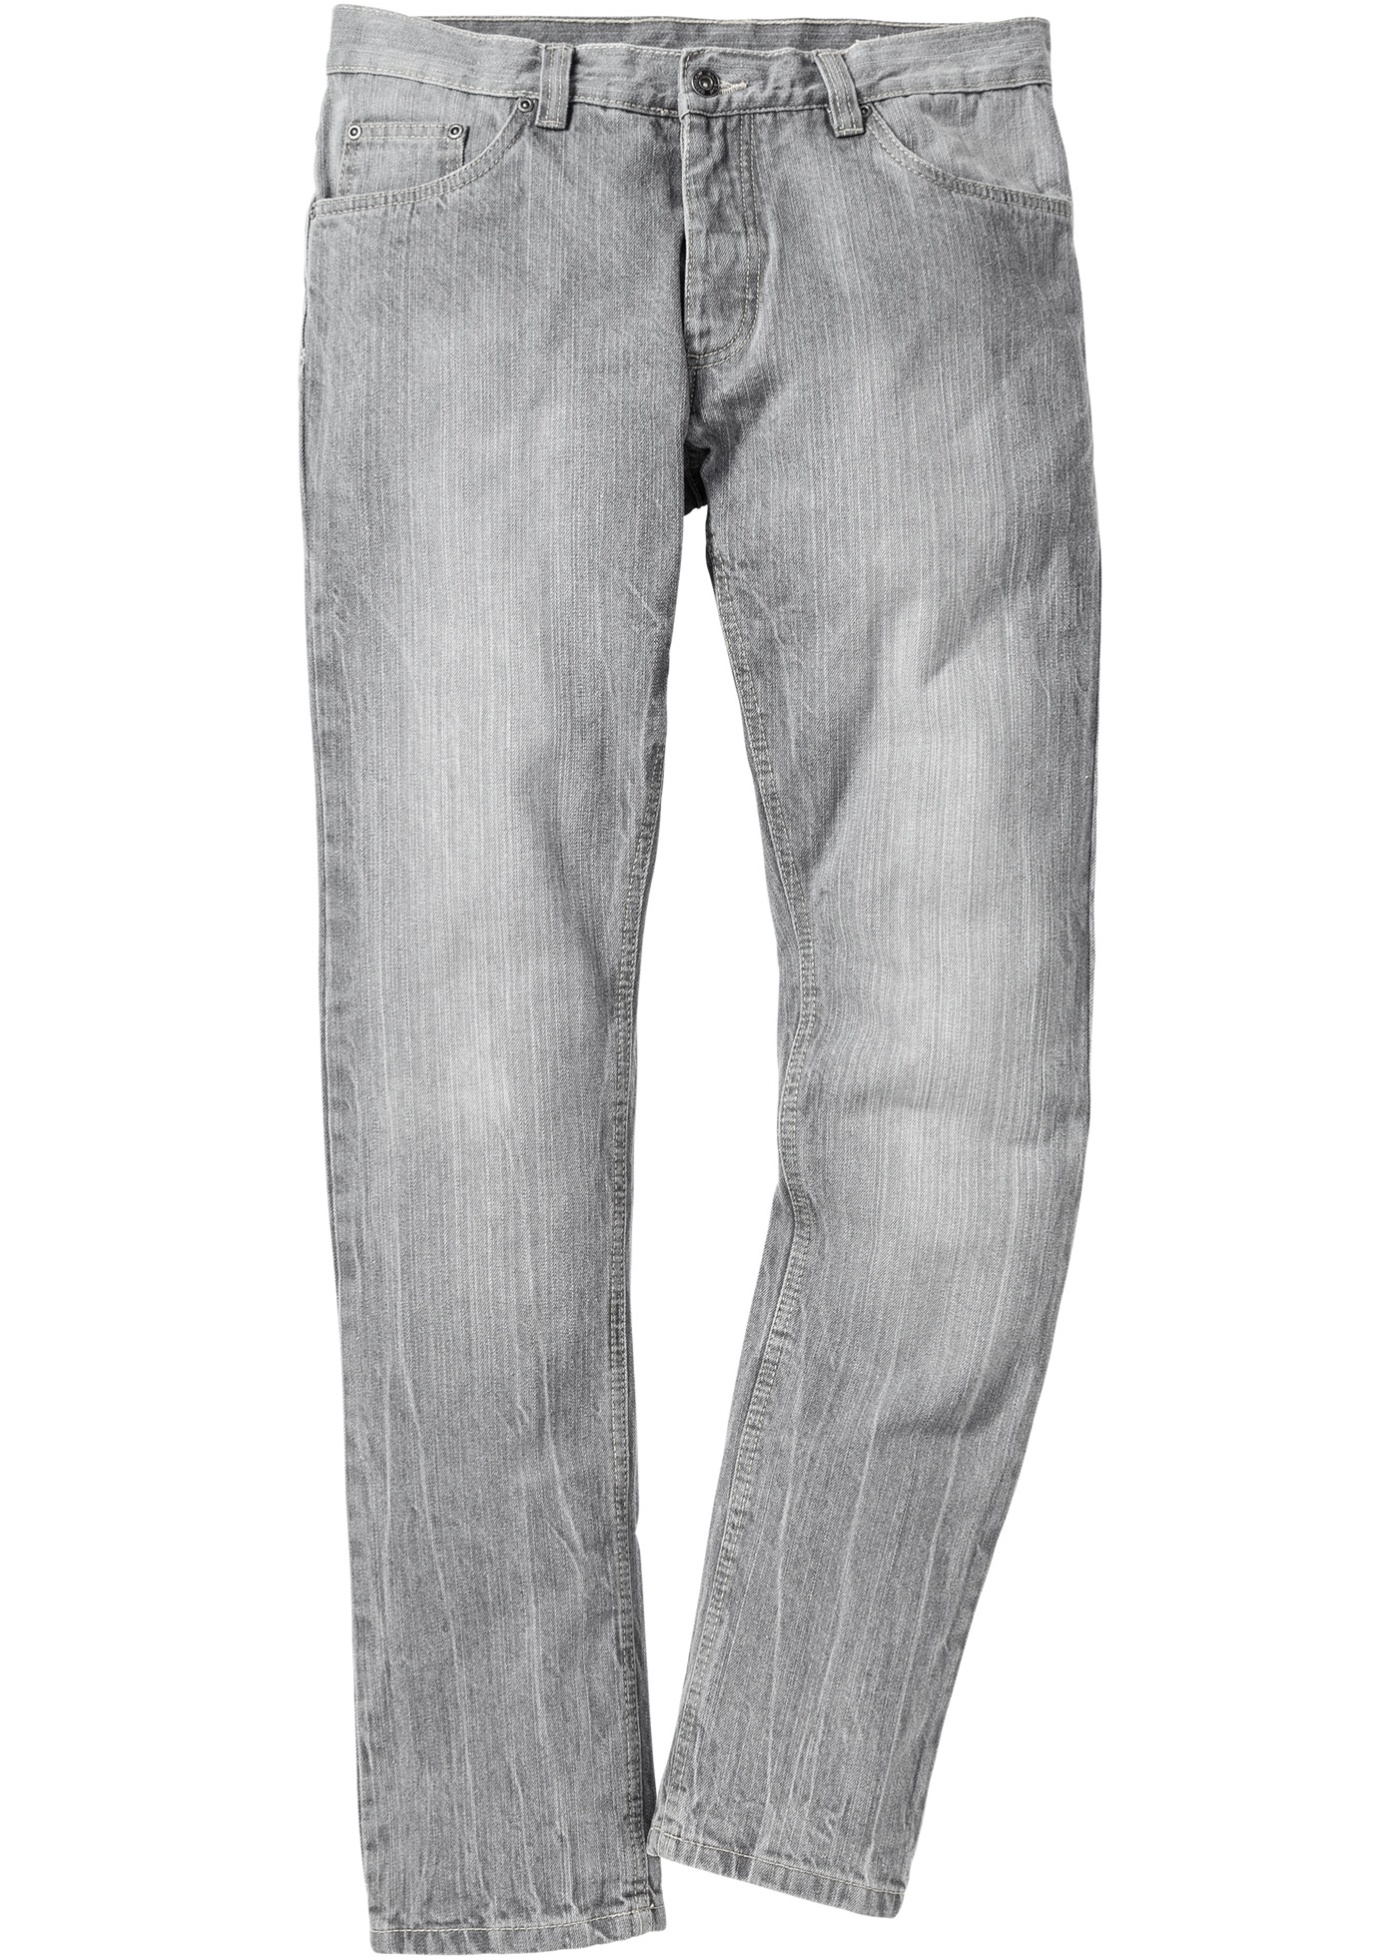 Jeans slim fit straight, längd 34